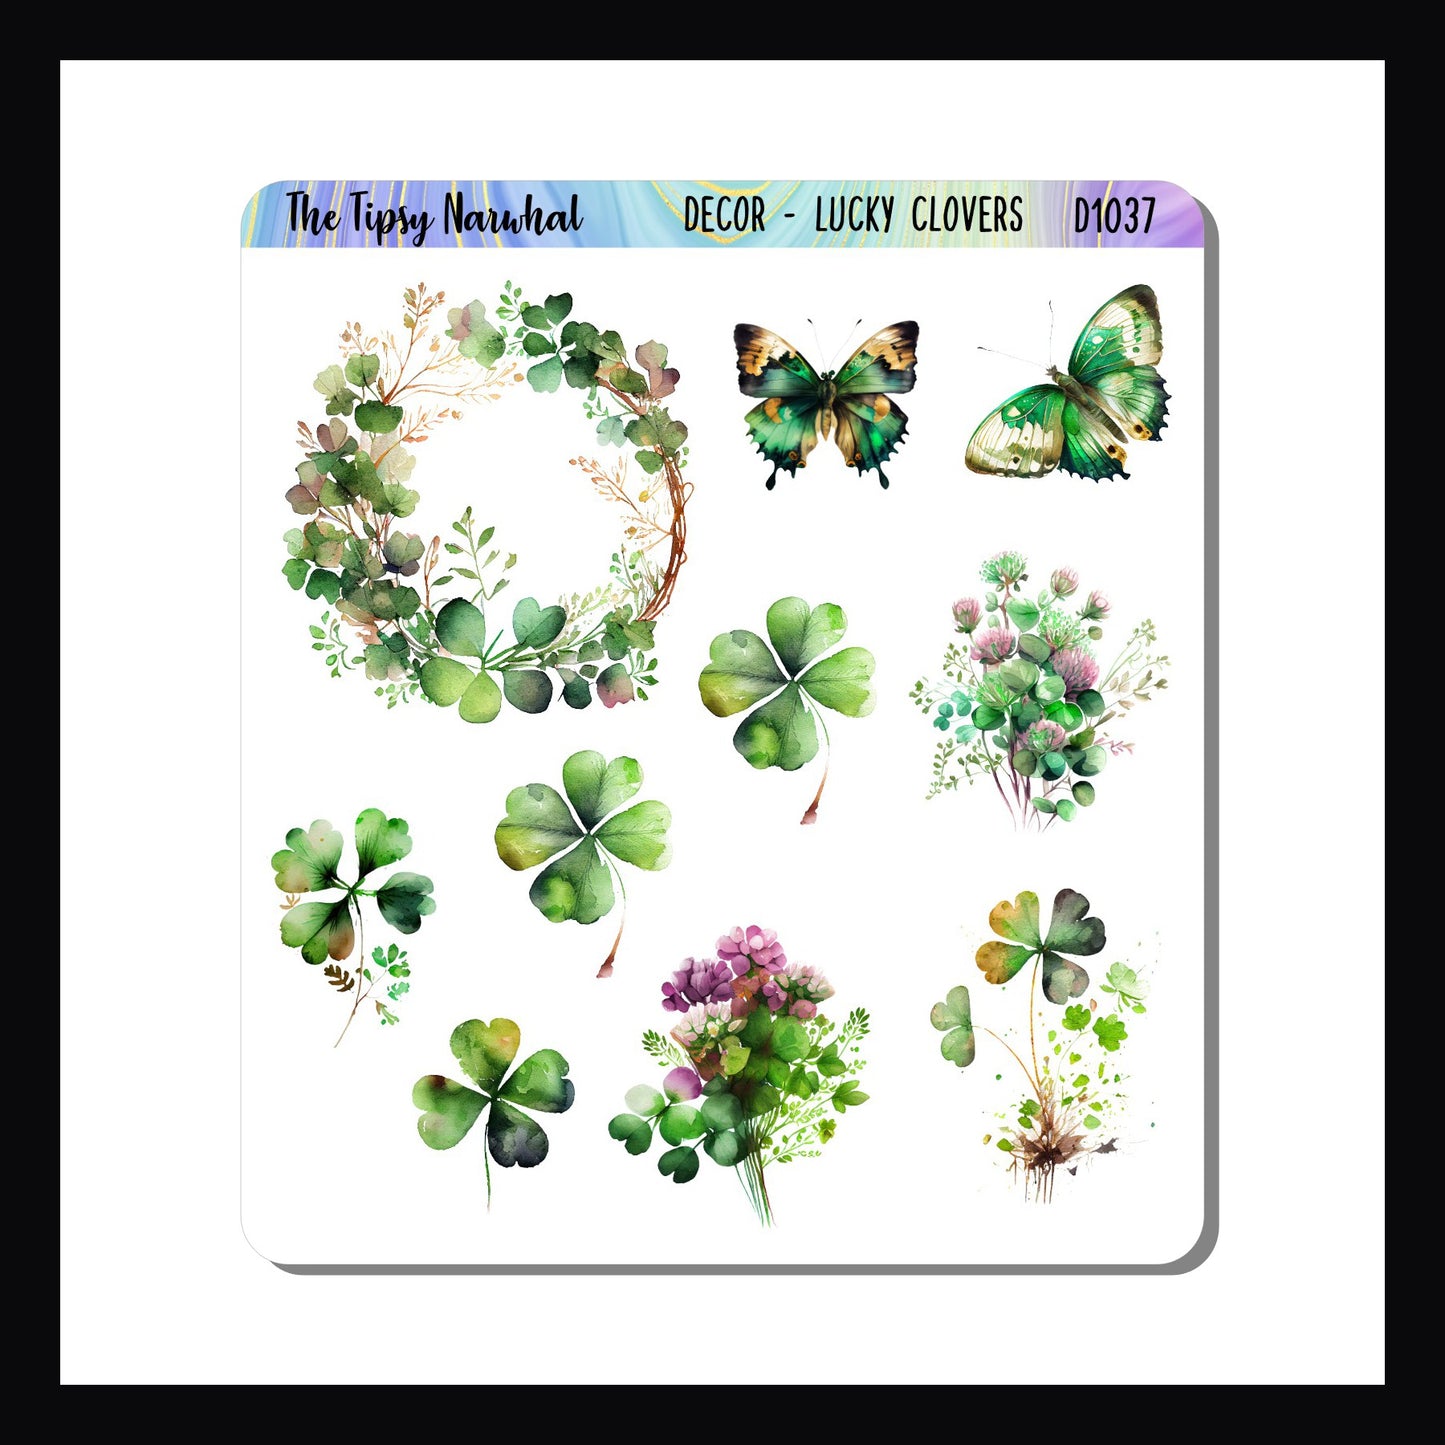 Lucky Clover Decor Sheet features 10 clover themed stickers, various 4 leaf clovers, a clover wreath, blooming clover and two green butterflies.